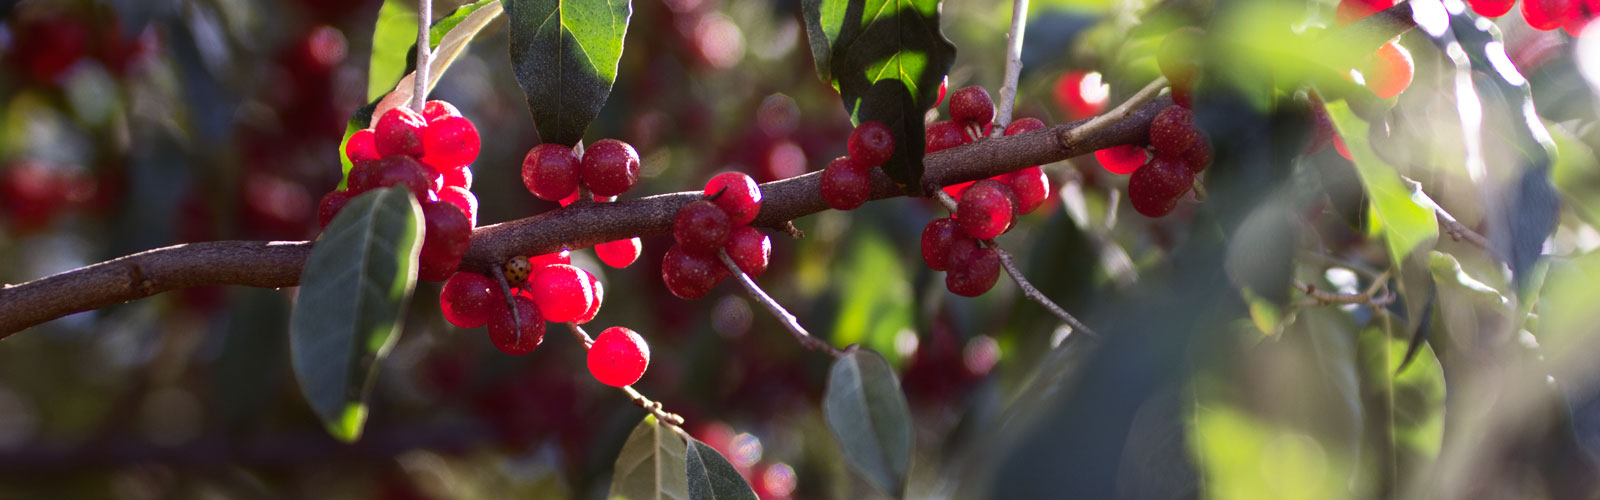 Ripe berries on an Autumn Olive shrub at Paul Siers' Autumn Berry Farm (Nov. 2018)